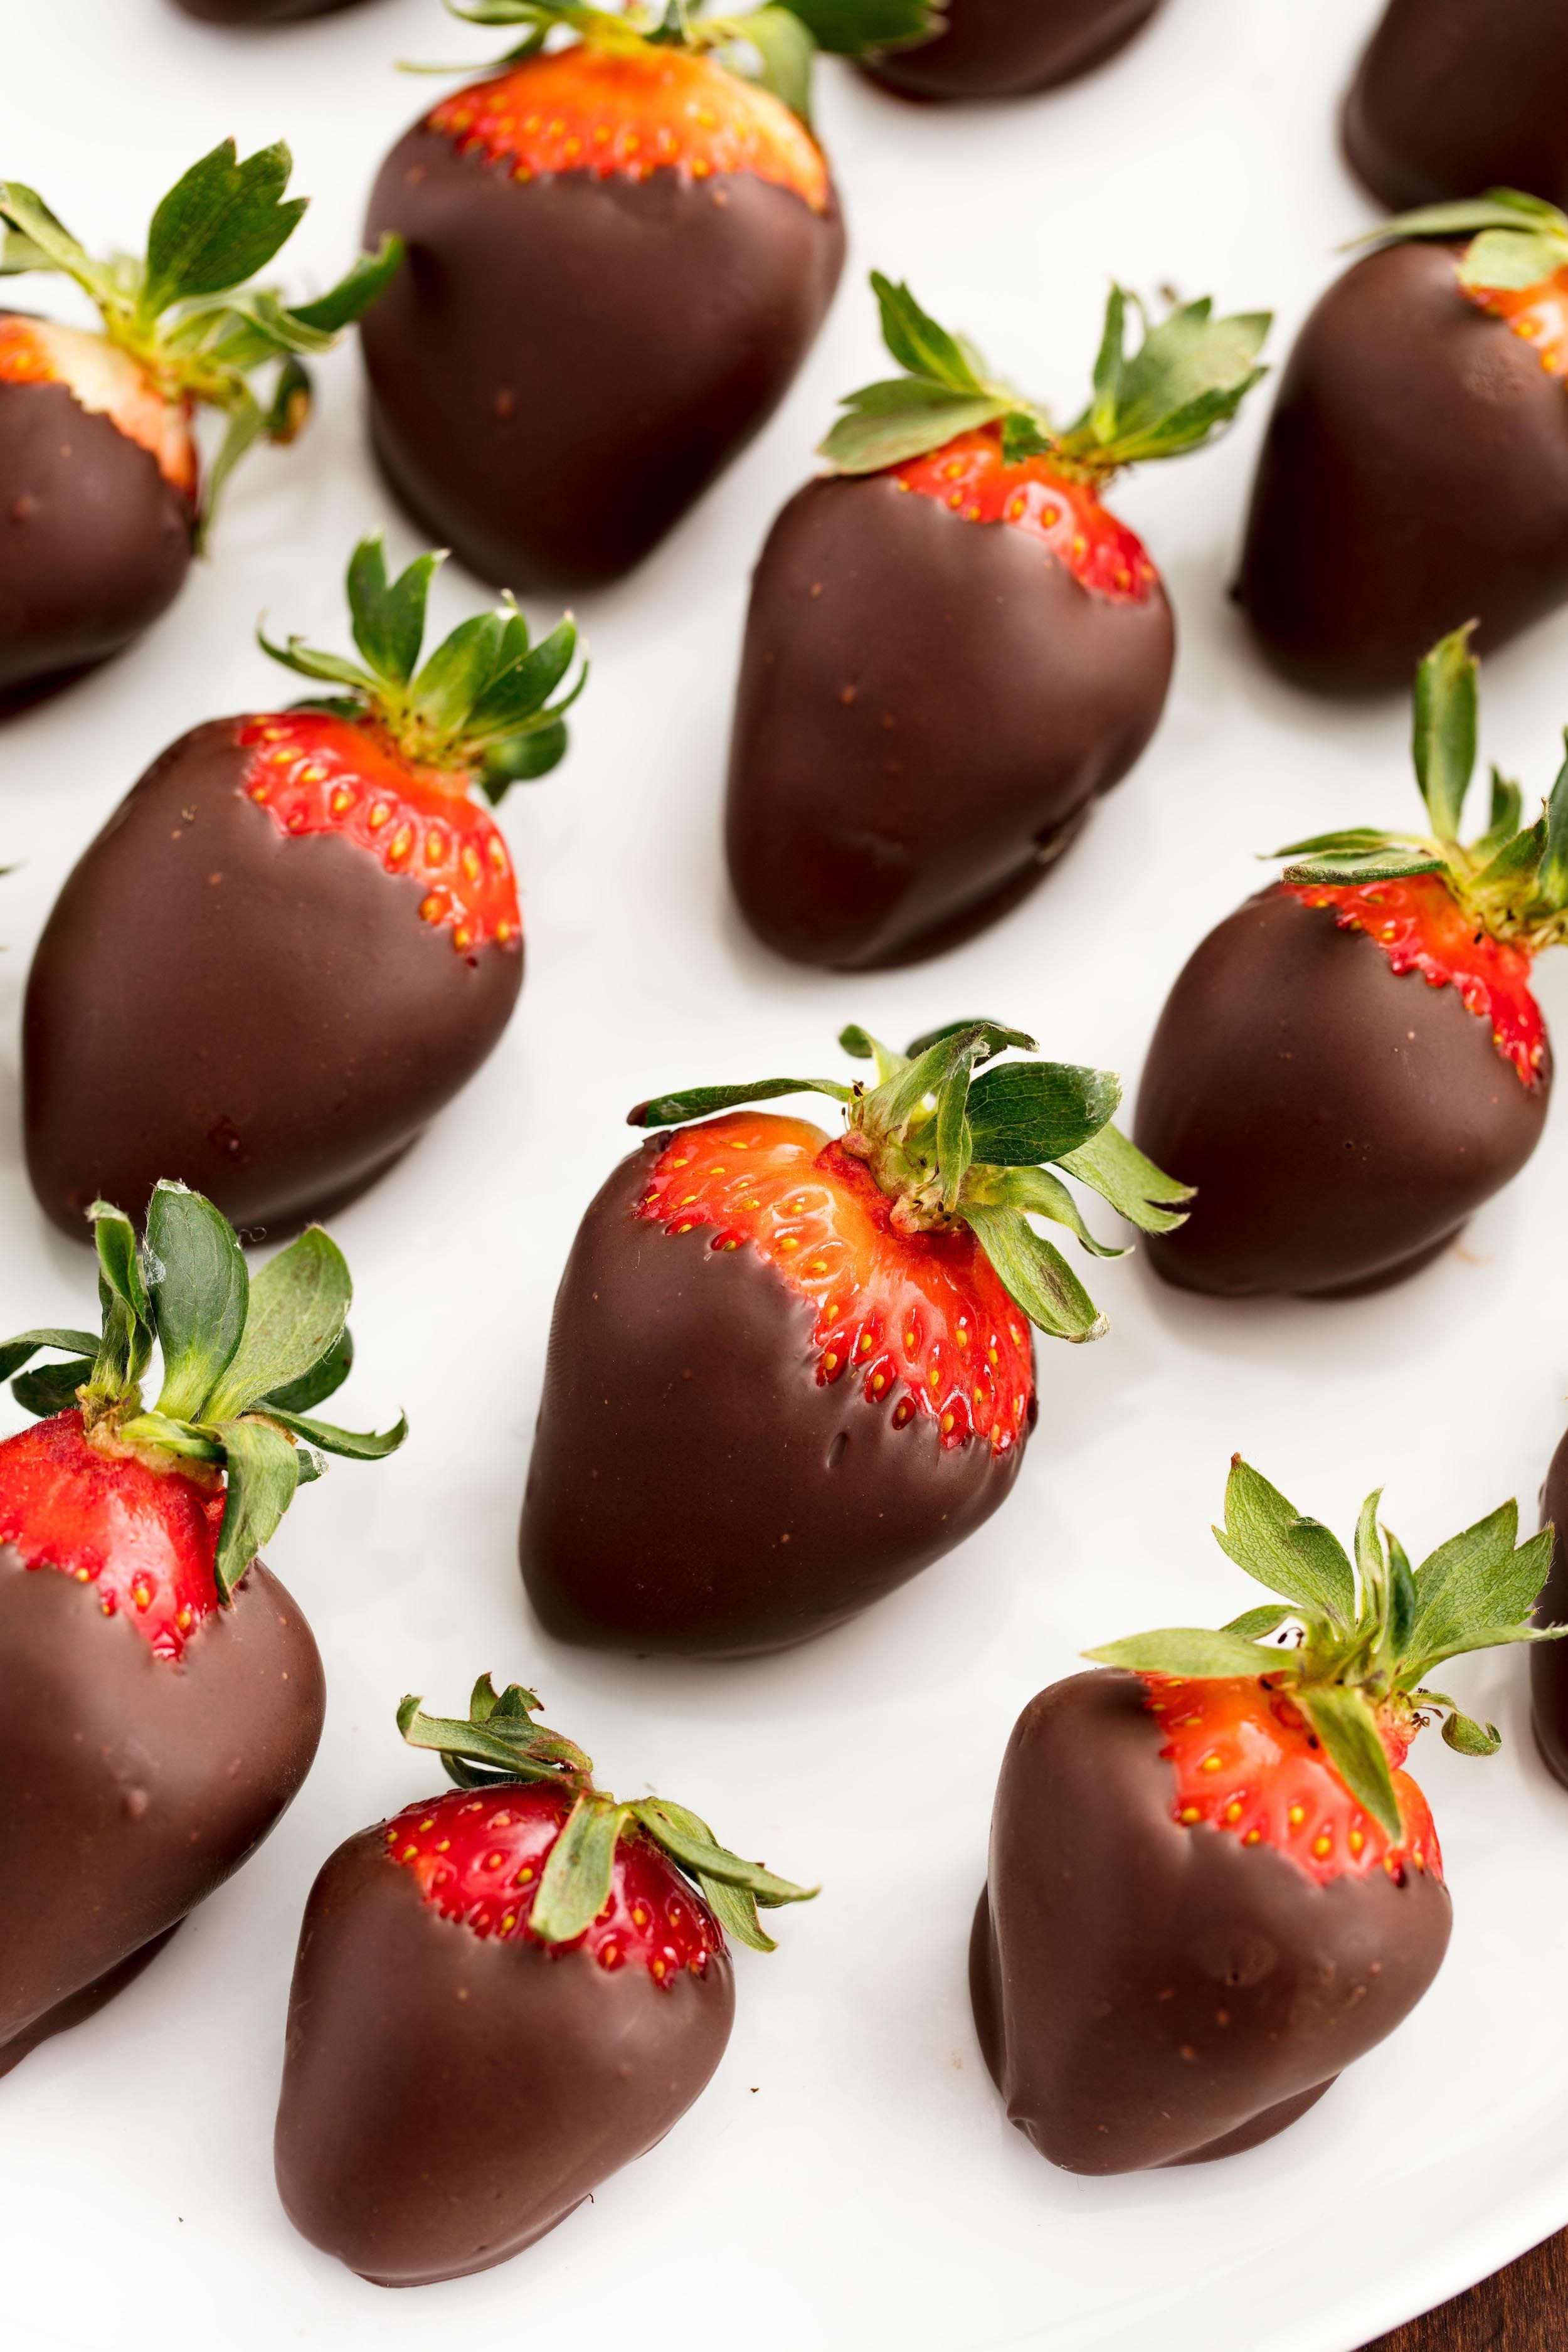 Best Chocolate-Covered Strawberries Recipe - How to Make Chocolate ...